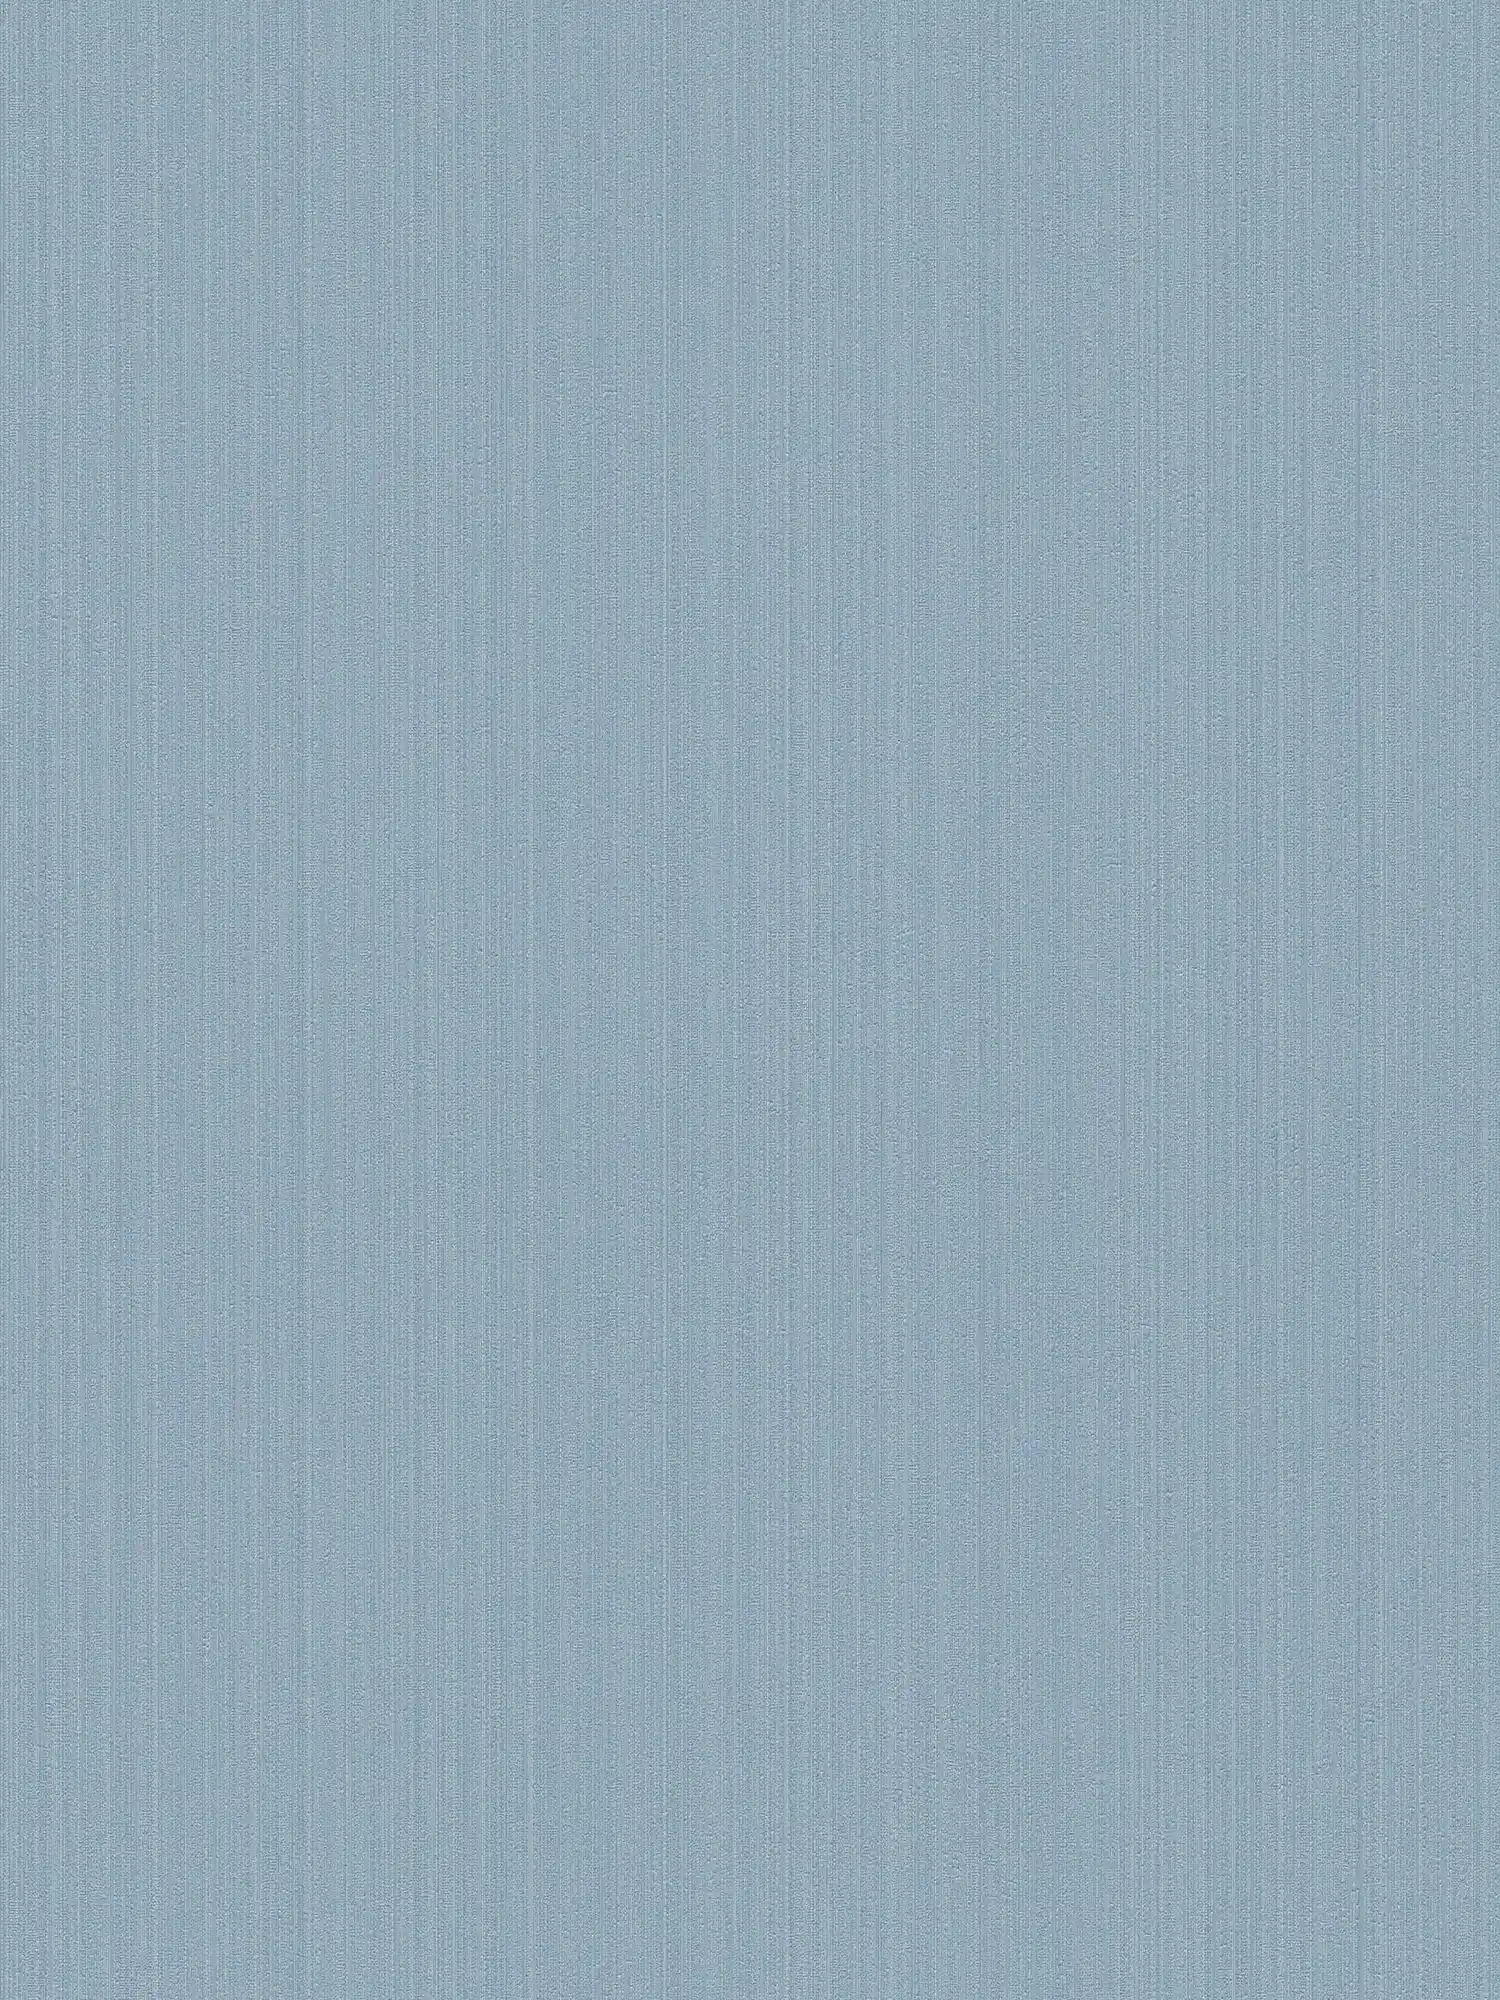 Blue non-woven wallpaper plain, satin with texture effect
